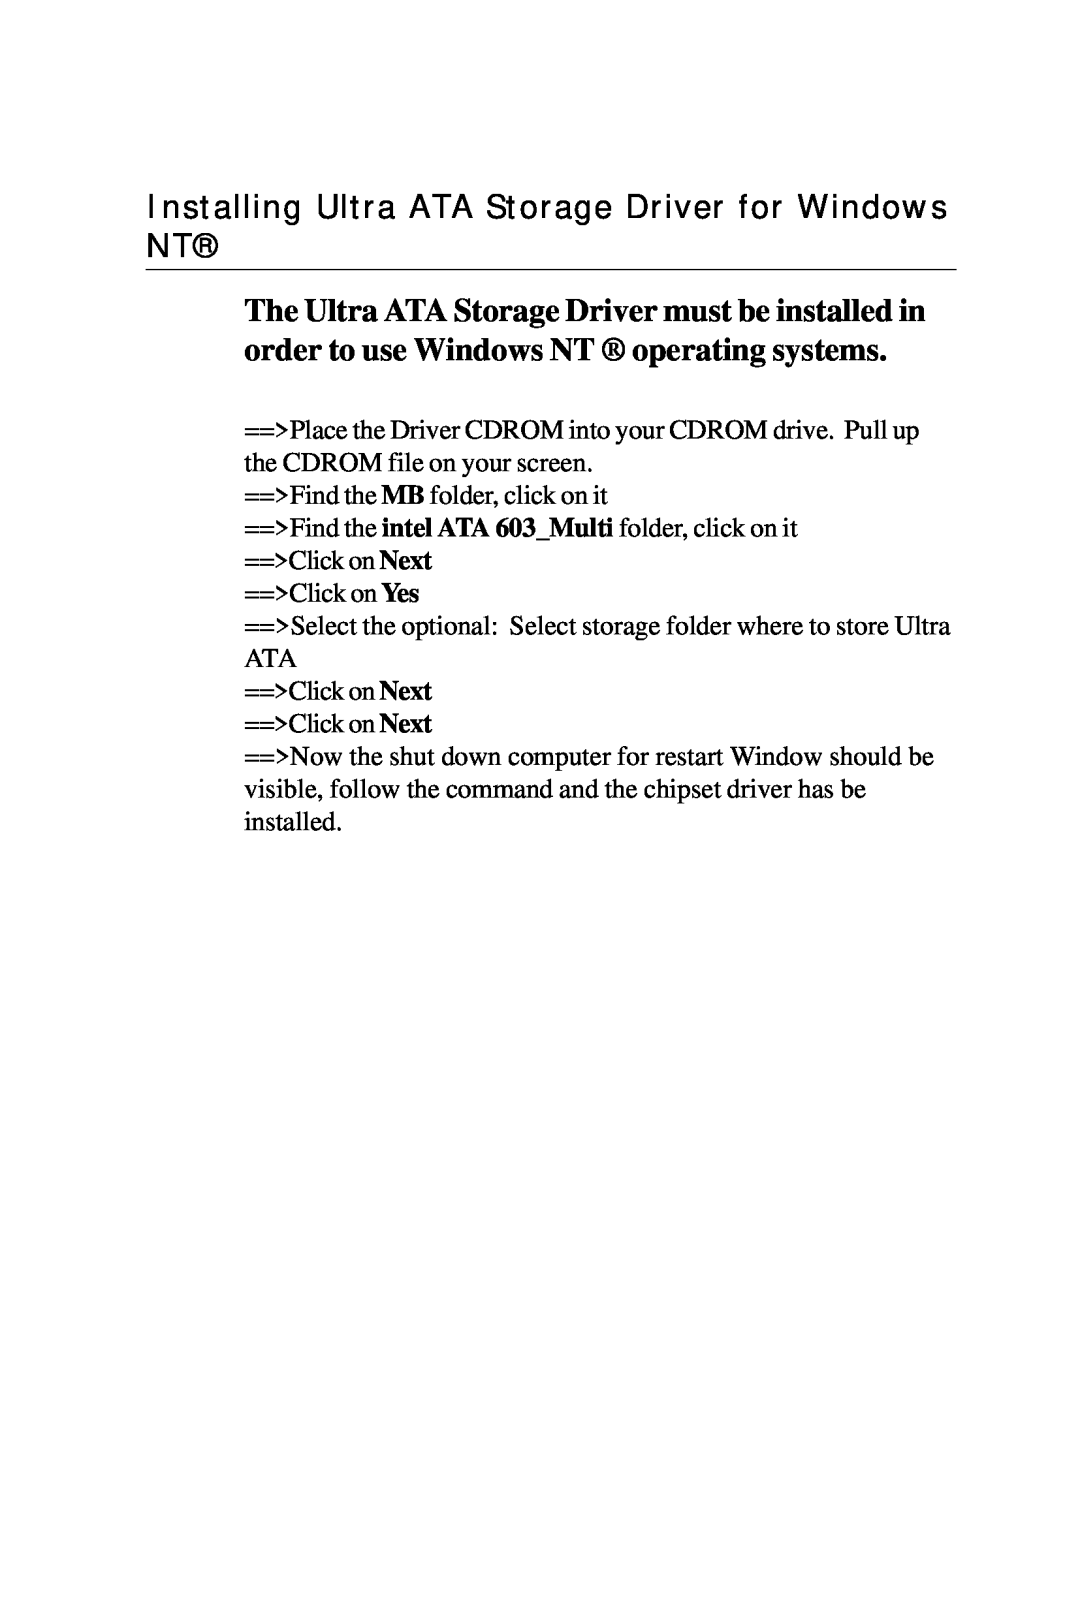 Intel PCM-6896 manual Installing Ultra ATA Storage Driver for Windows NT 